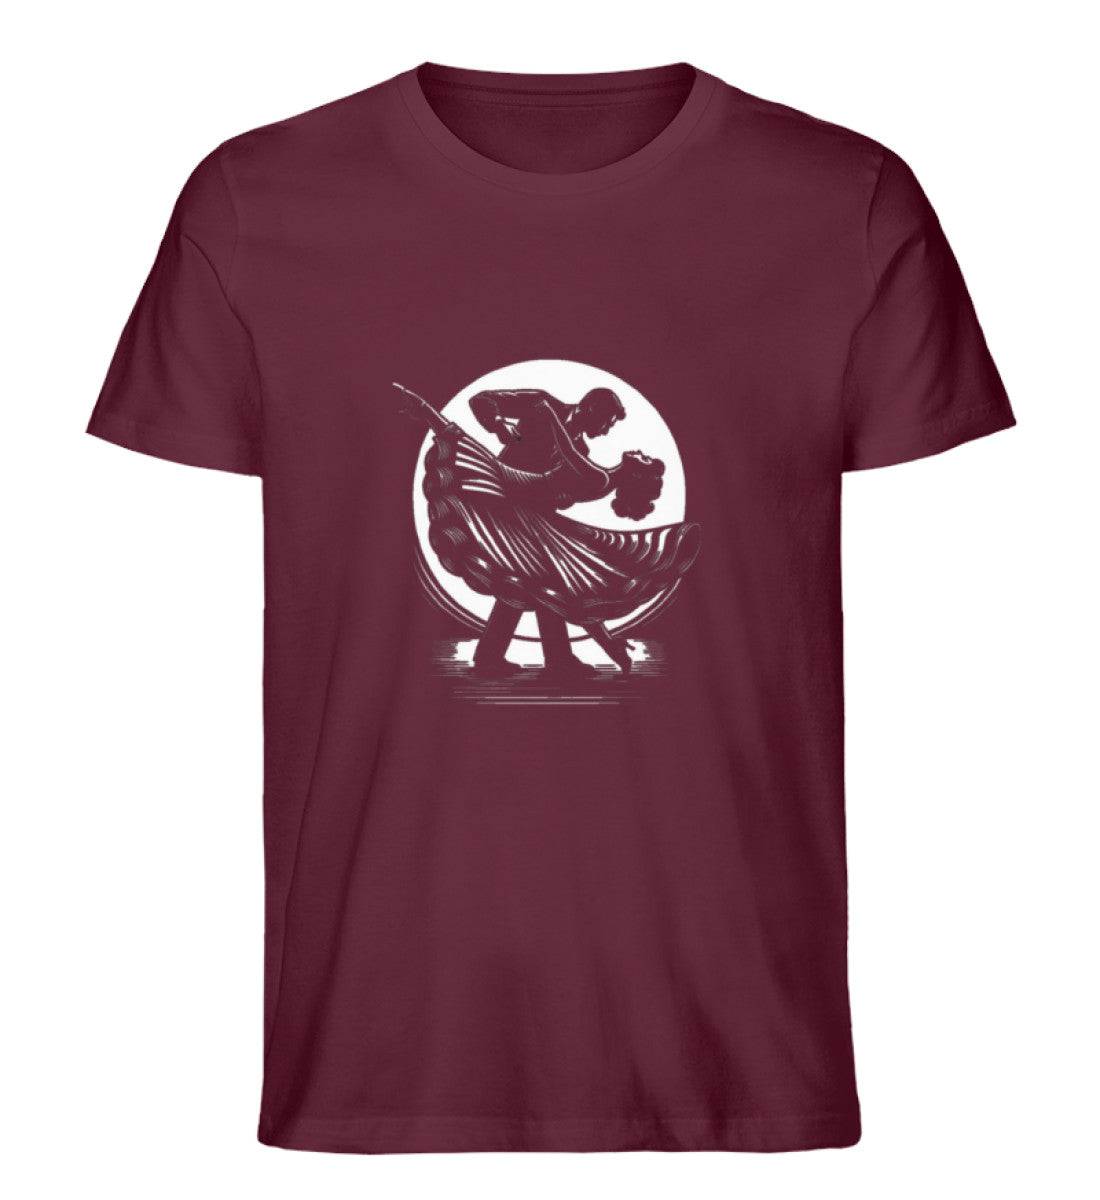 First Sight T-shirt | The Original One